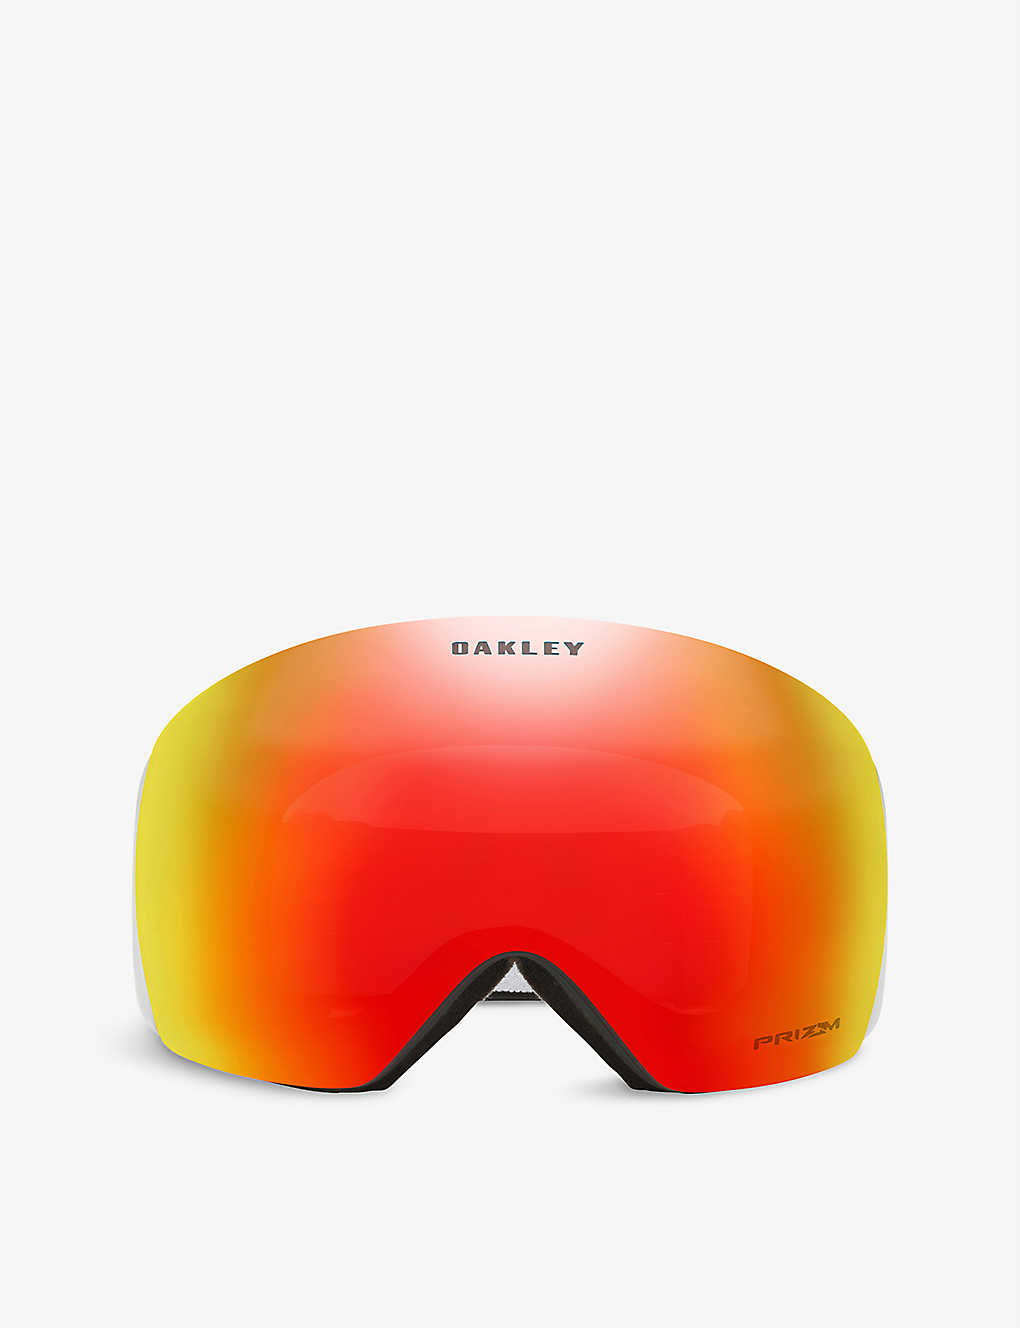 Shop Oakley Womens Black Oo7050-33 Flight Deck Ski Goggles